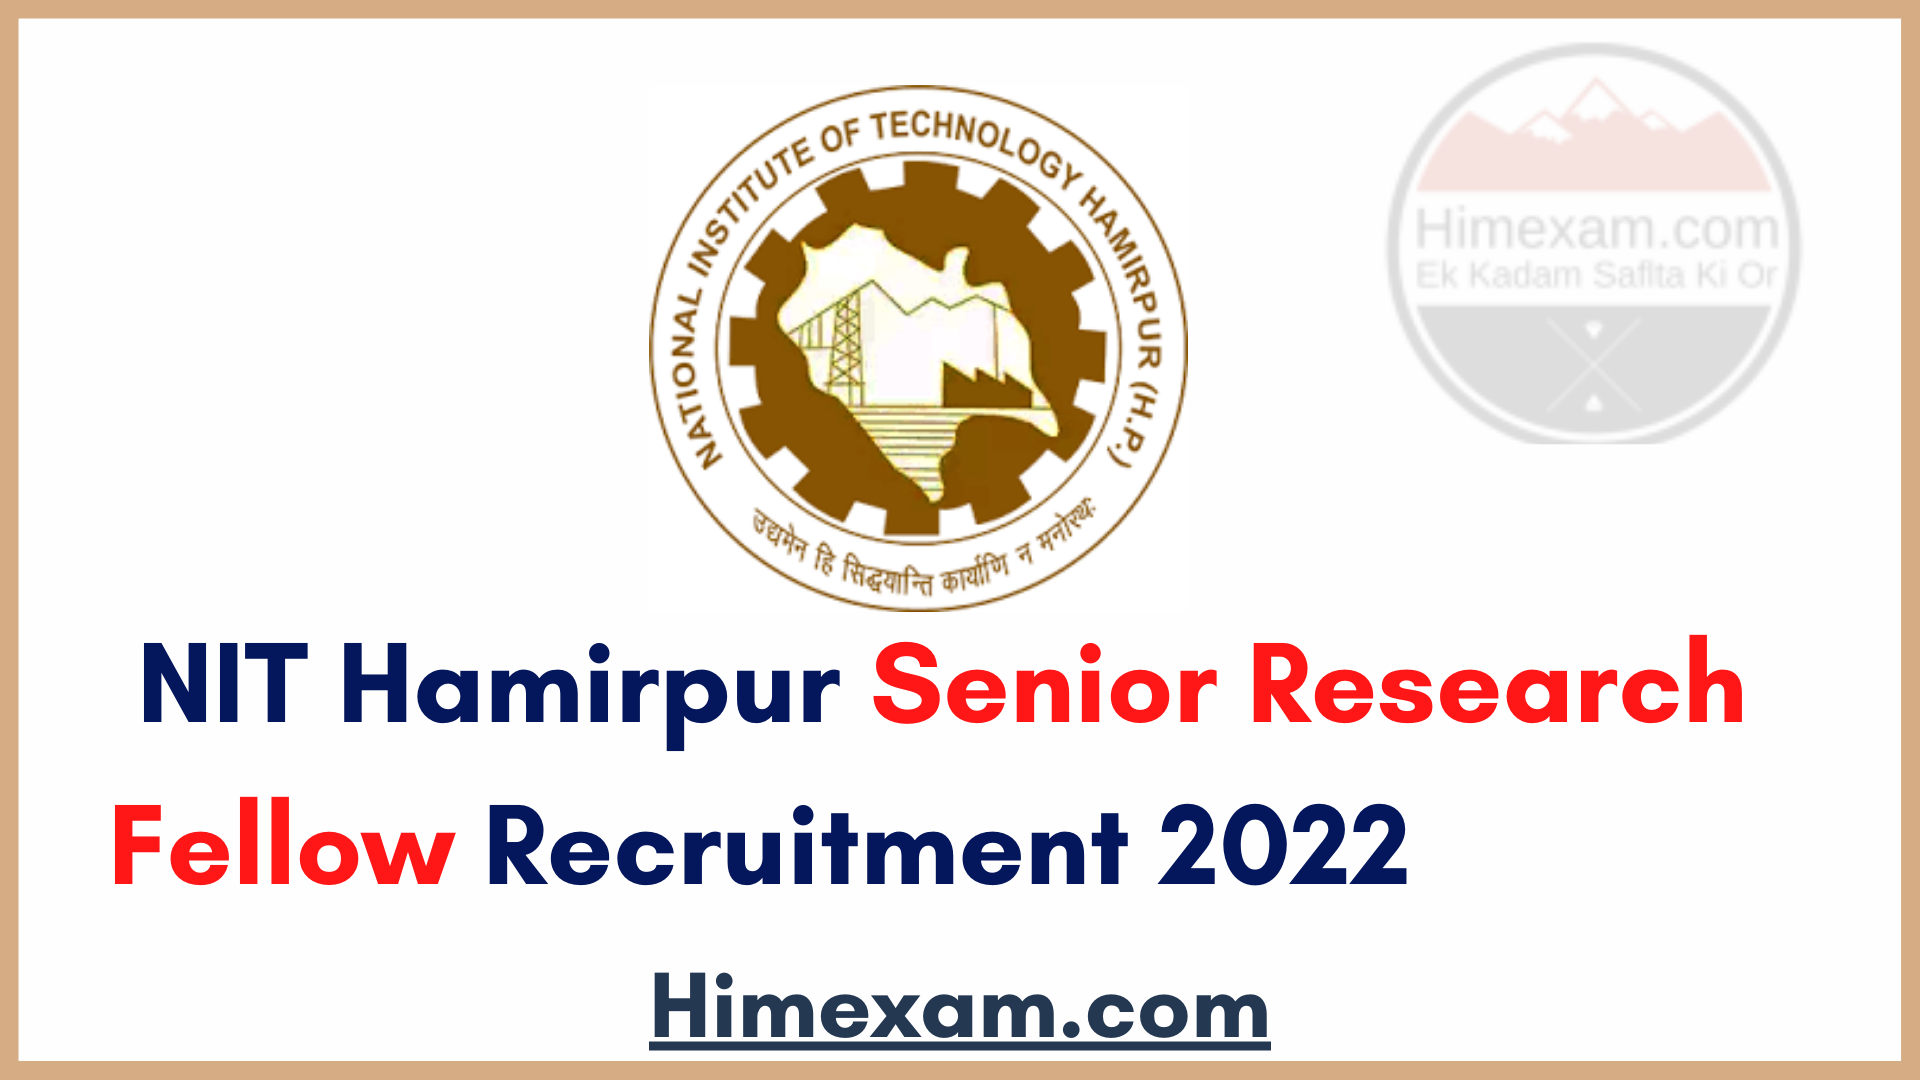 NIT Hamirpur Senior Research Fellow Recruitment 2022